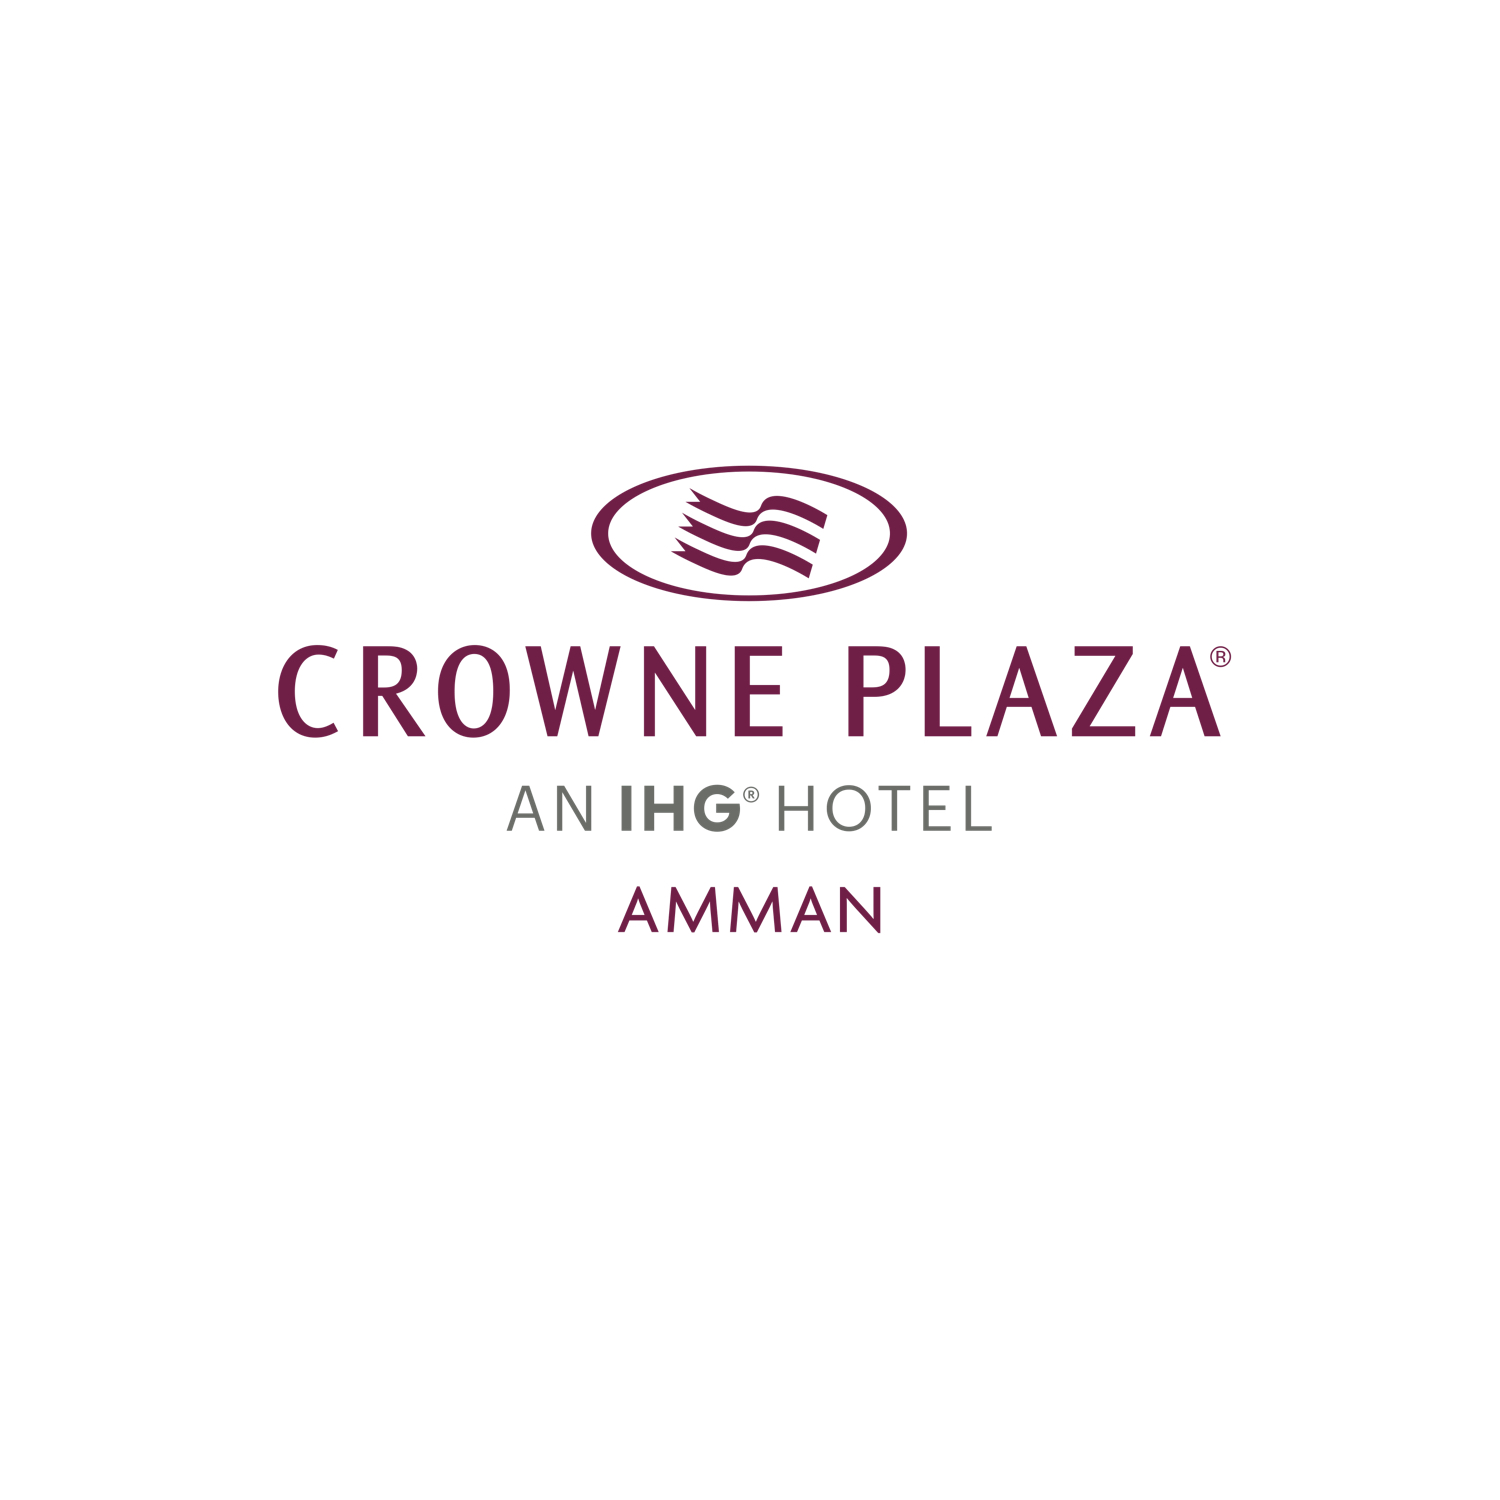 Crowne Plaza Amman - Amman, Jordan